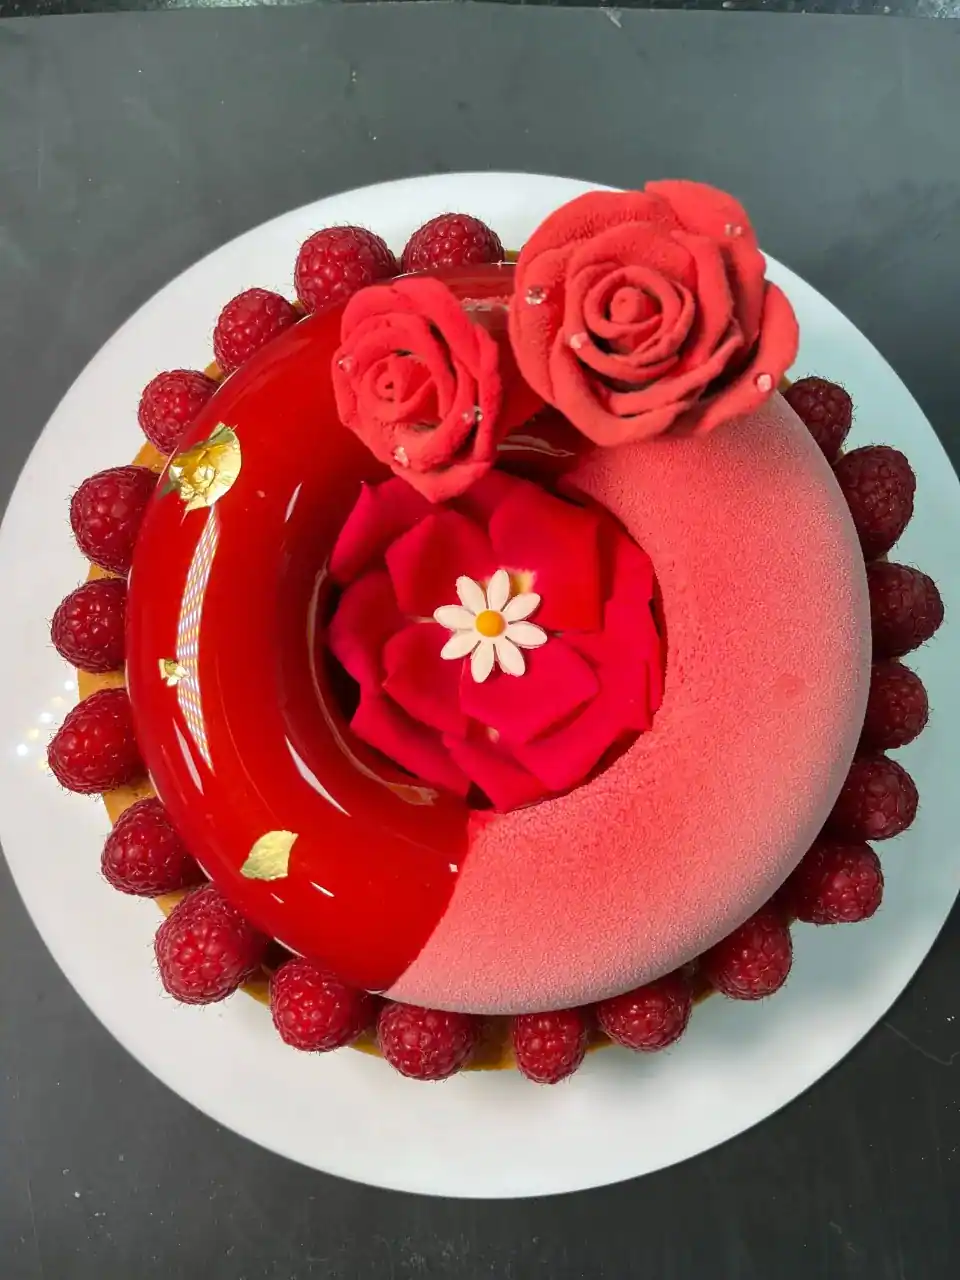 Pastry Chef Shares Raspberry Rose Tart Recipe To Celebrate This Love Season